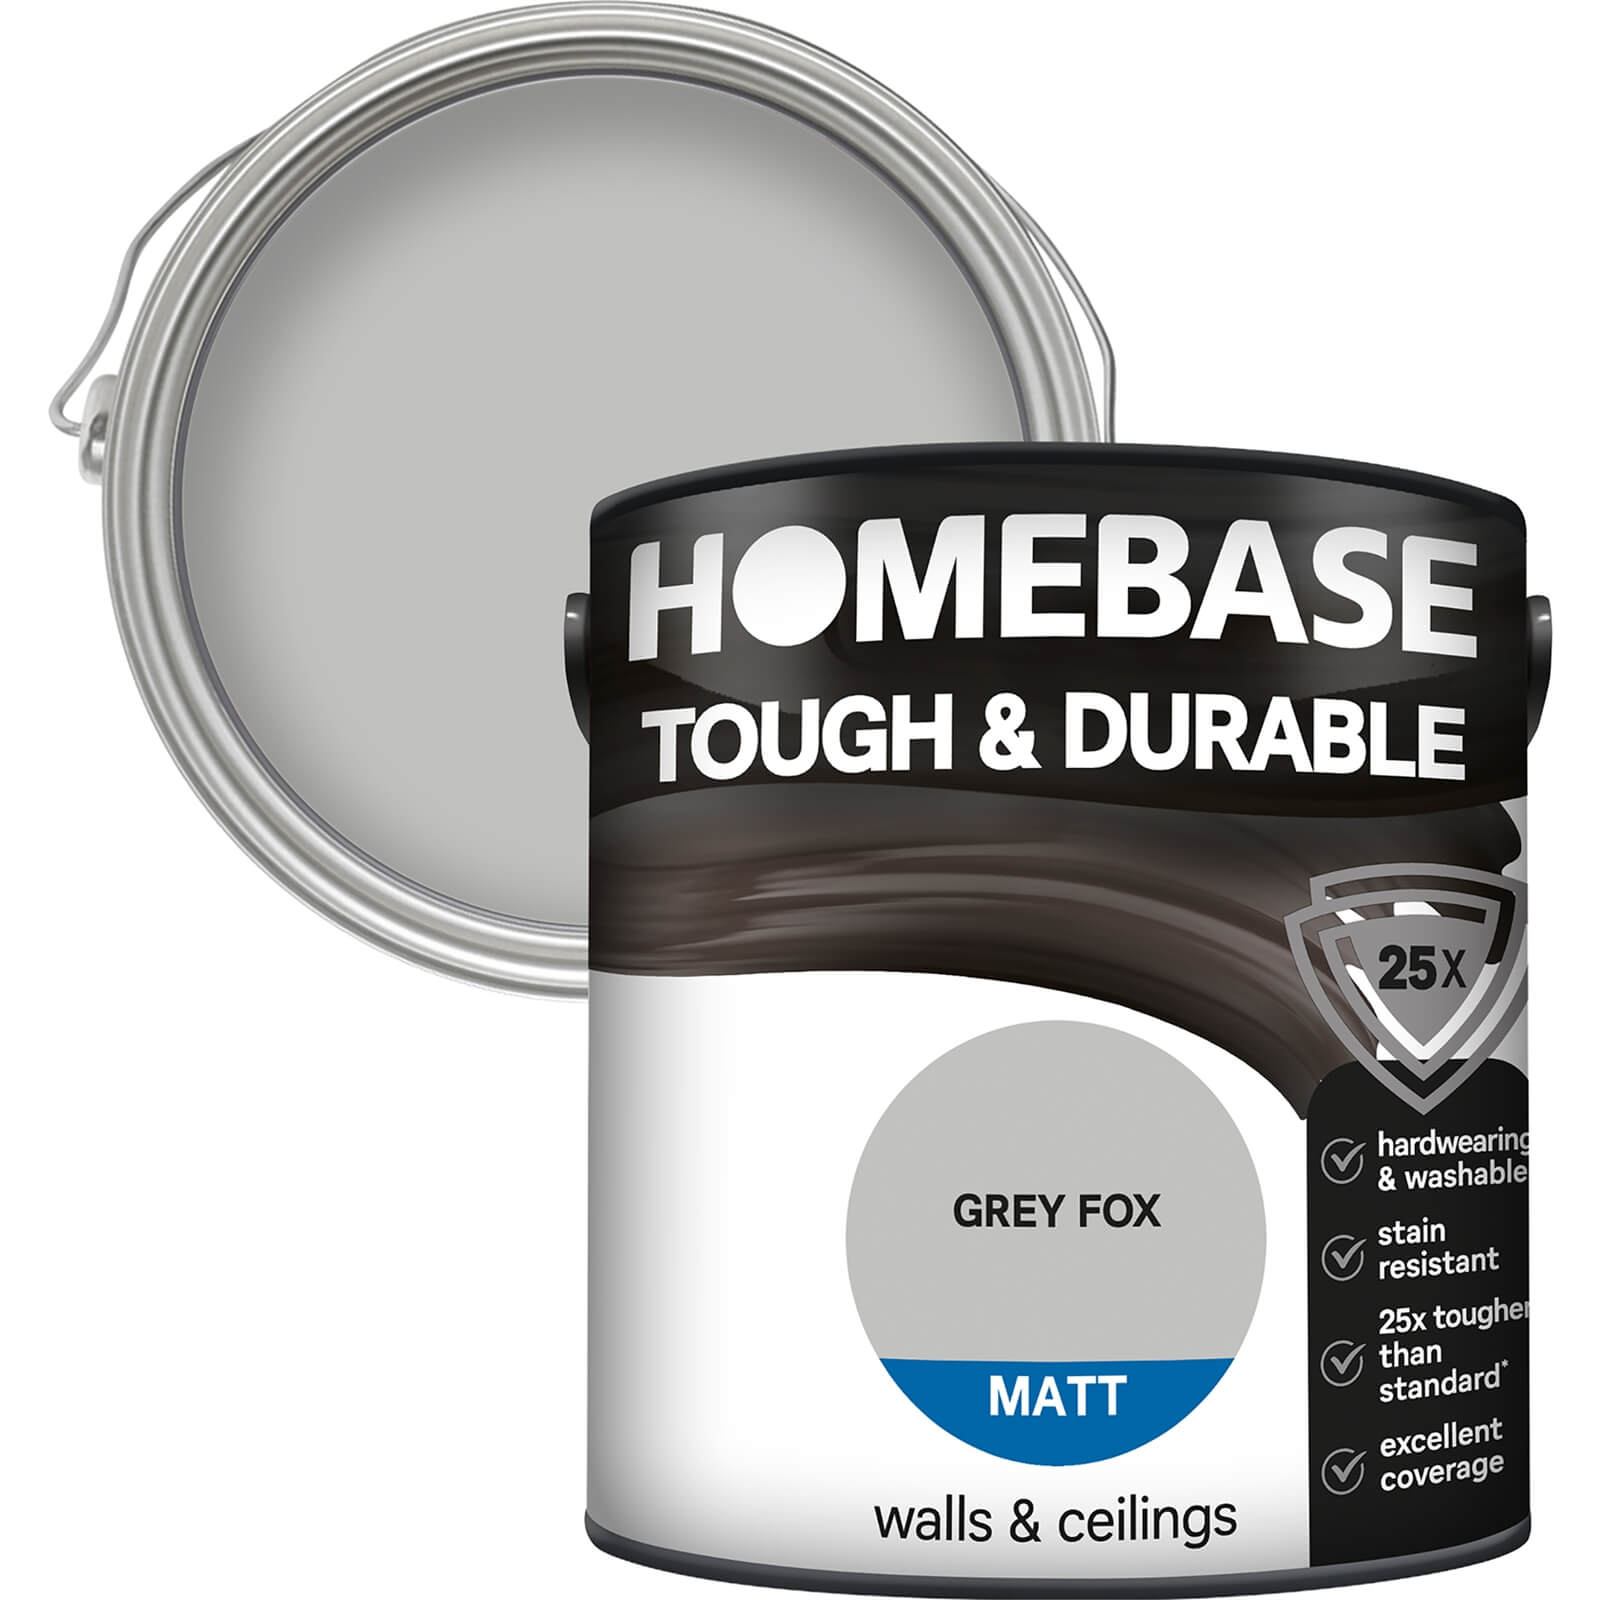 Homebase Tough & Durable Matt Paint Grey Fox - 2.5L